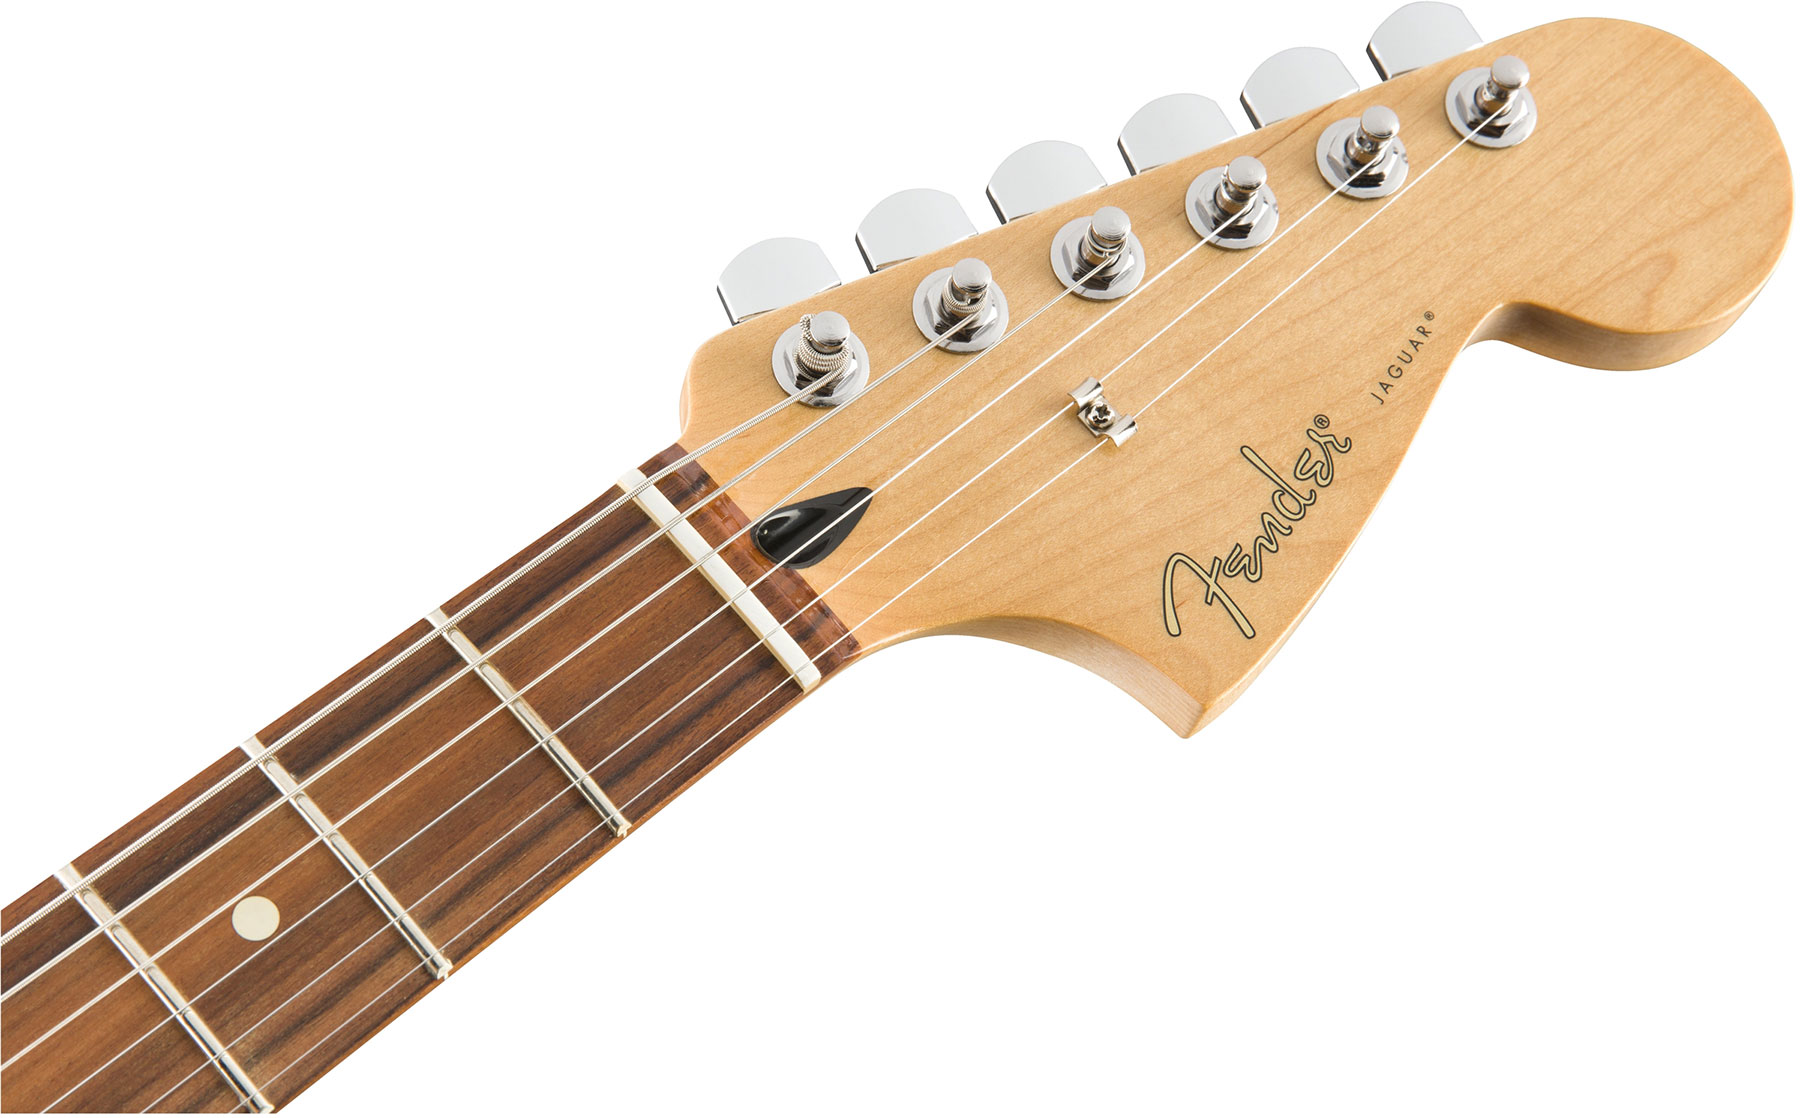 Fender Jaguar Player Mex Hs Trem Pf - Tidepool - Retro rock electric guitar - Variation 3